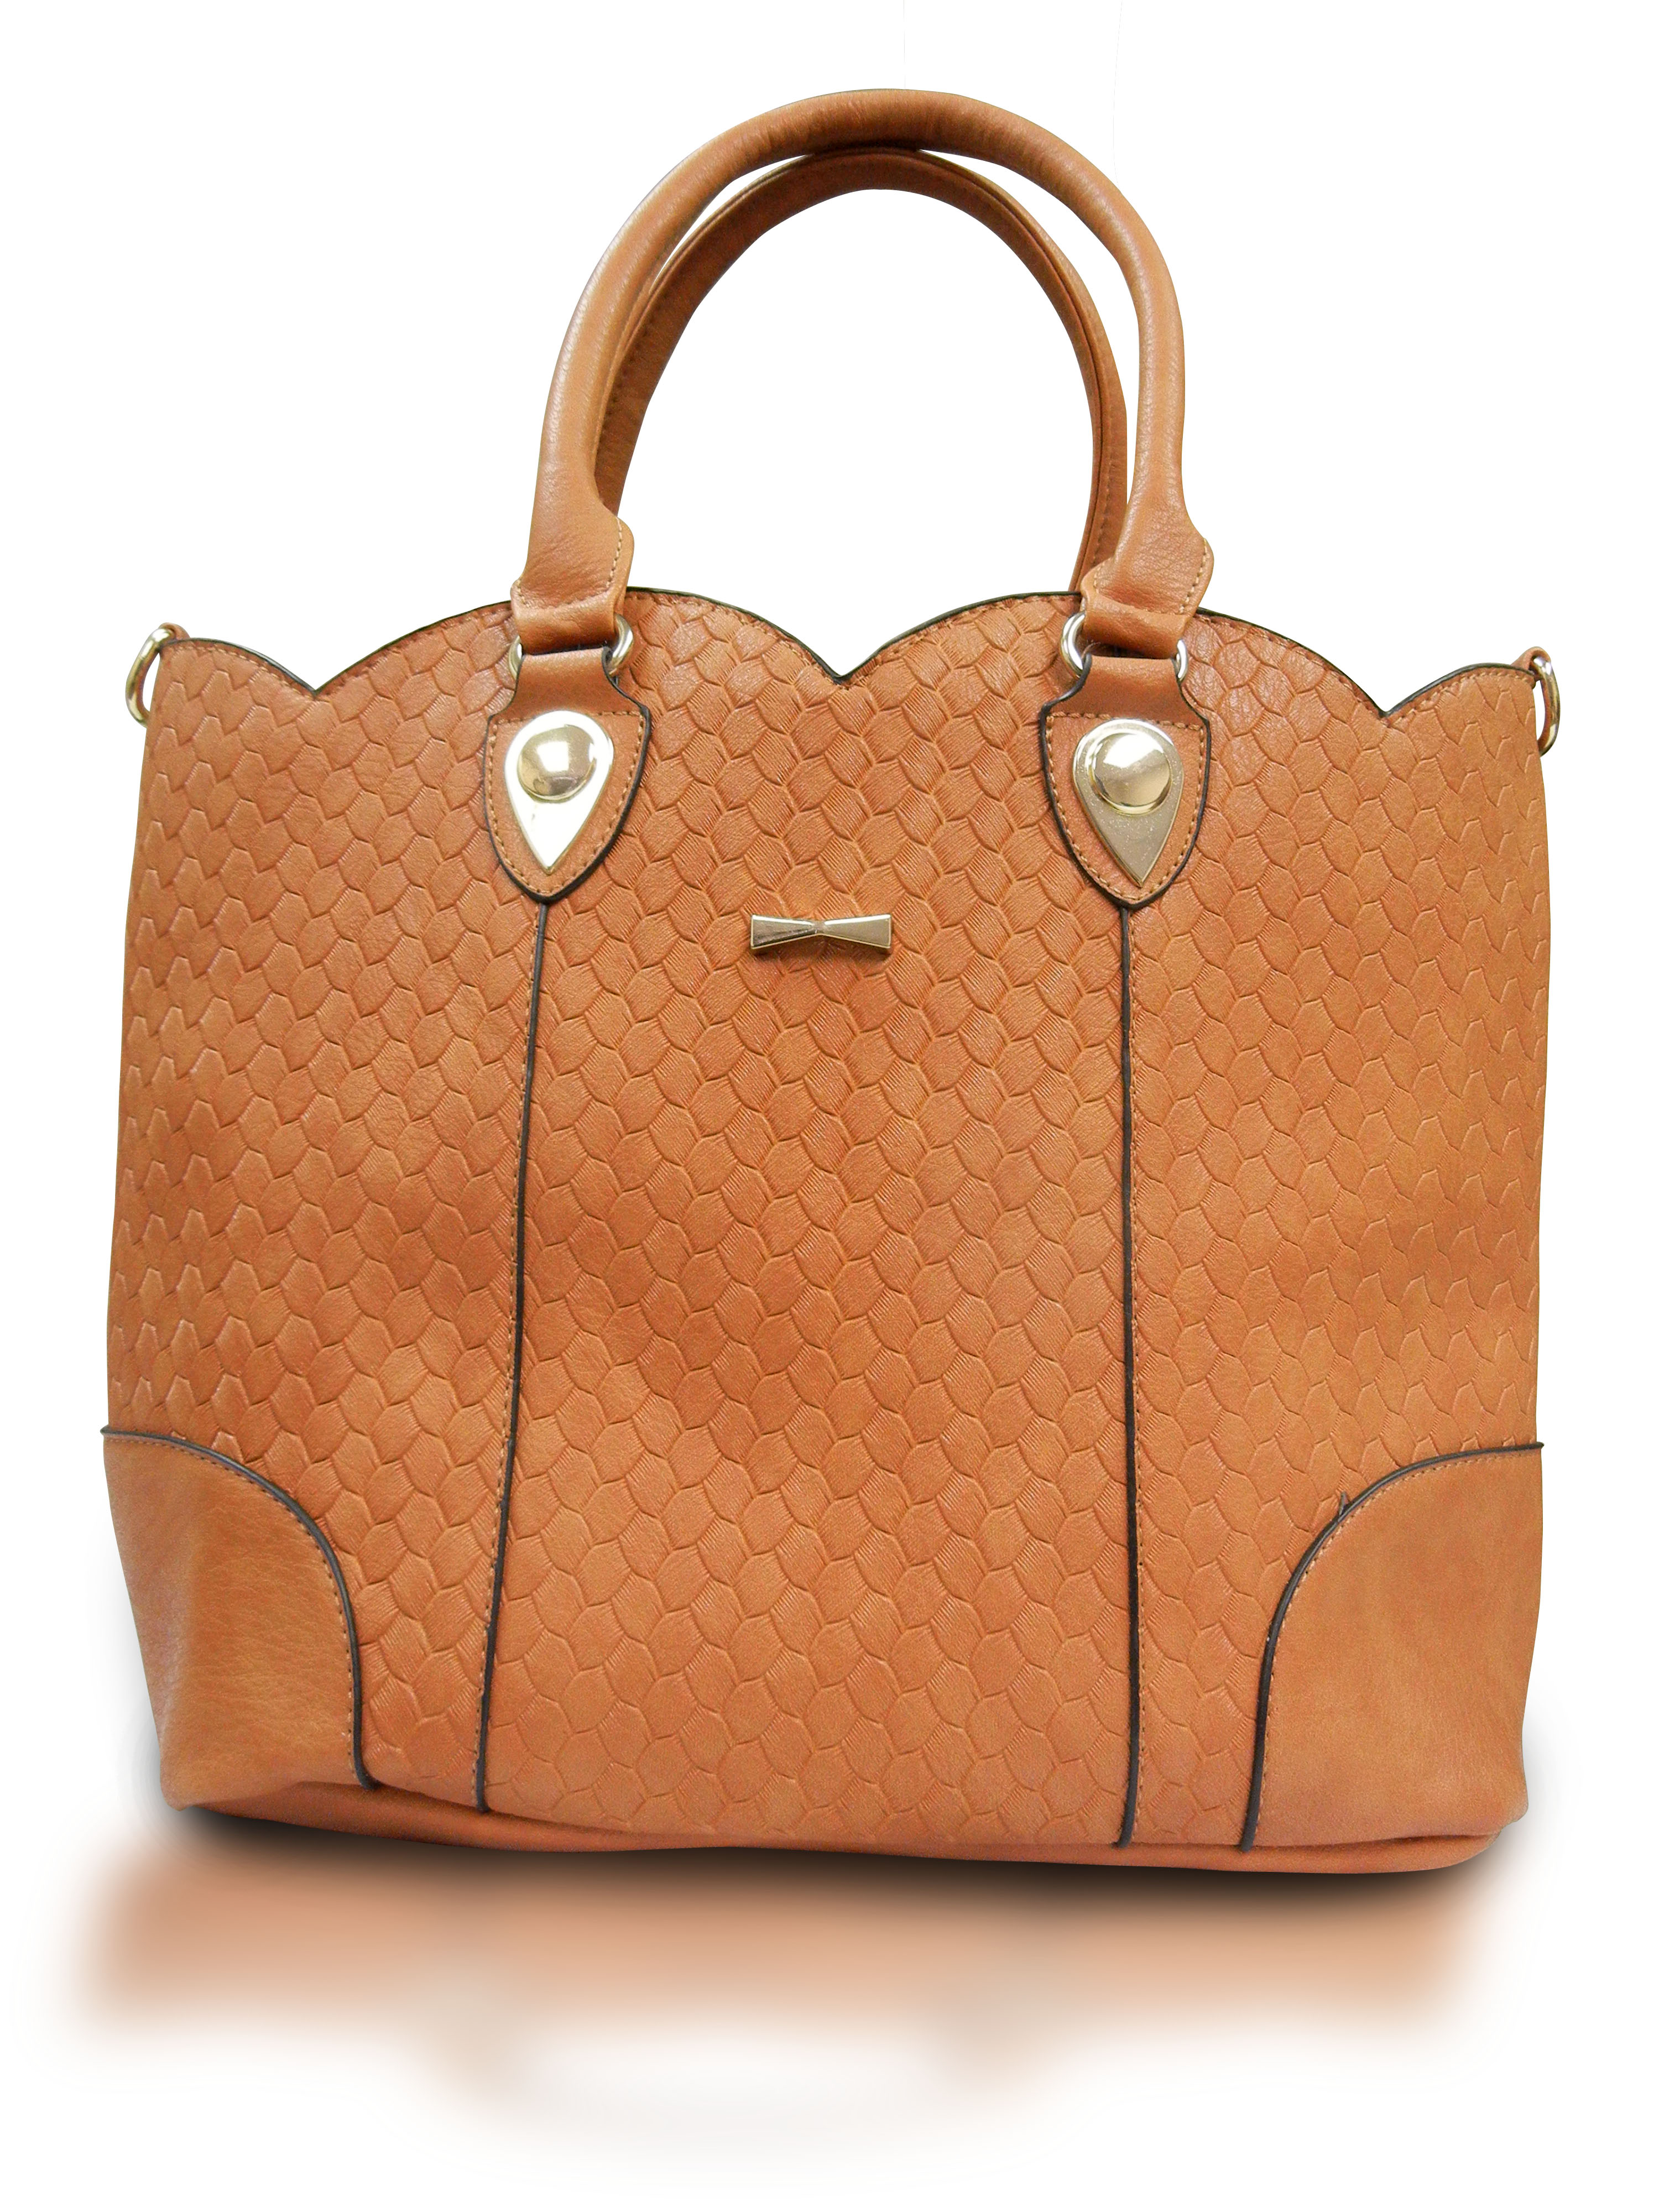 Large Ladies Handbag with removable straps,Tan, Camel color,